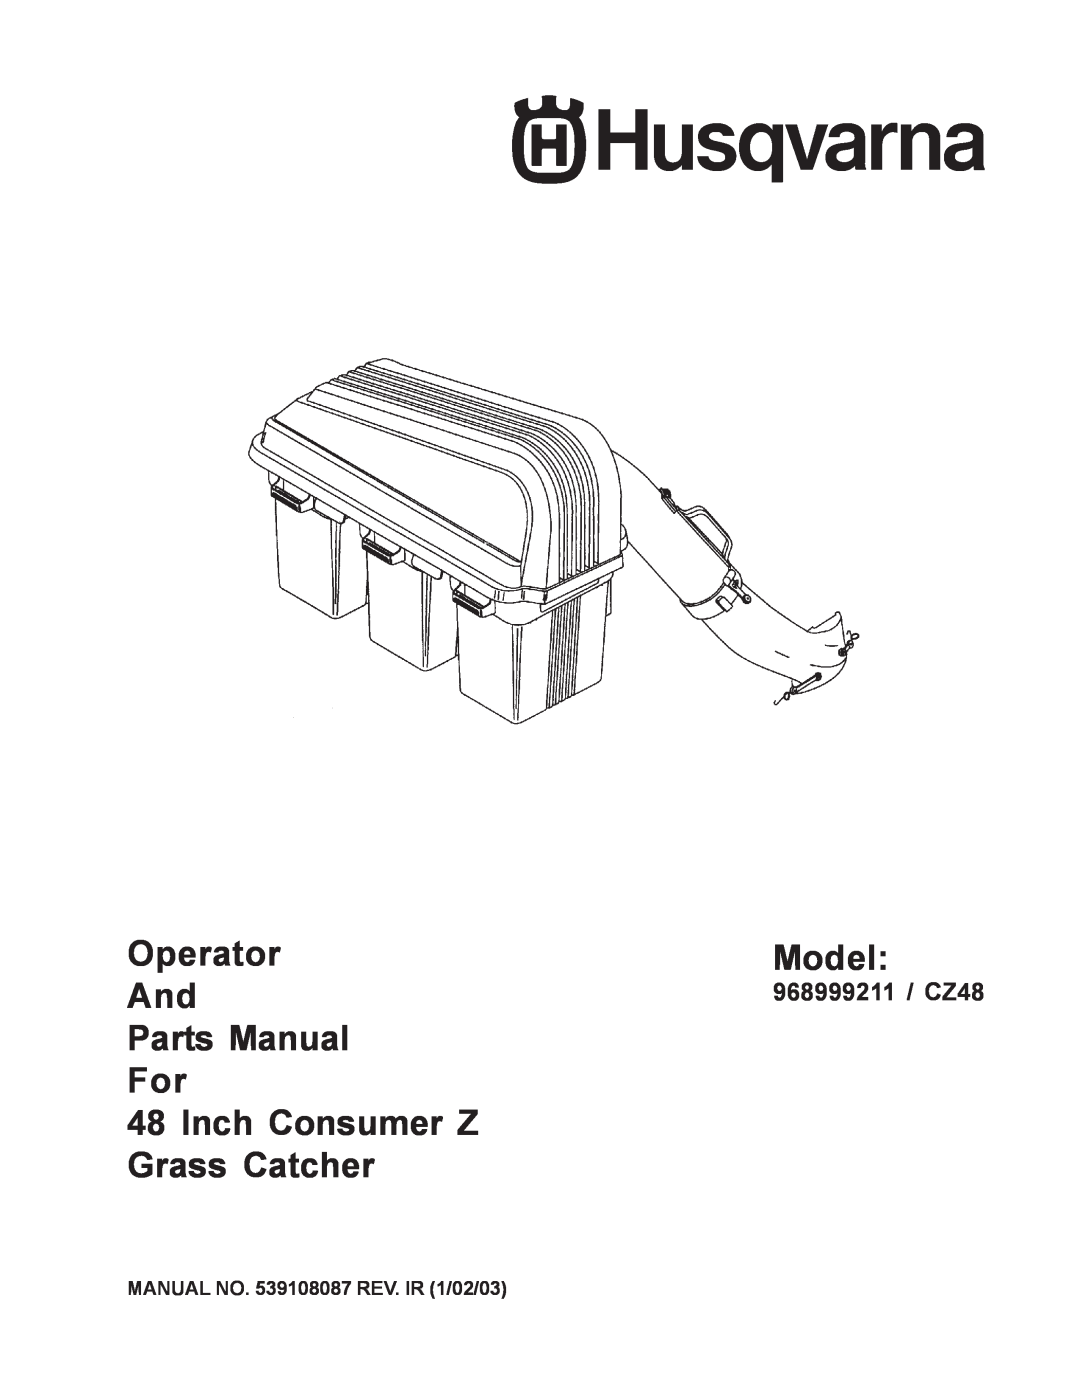 Husqvarna 968999211 / CZ48 manual MANUAL NO. 539108087 REV. IR 1/02/03, Operator, Model, Parts Manual, Inch Consumer Z 